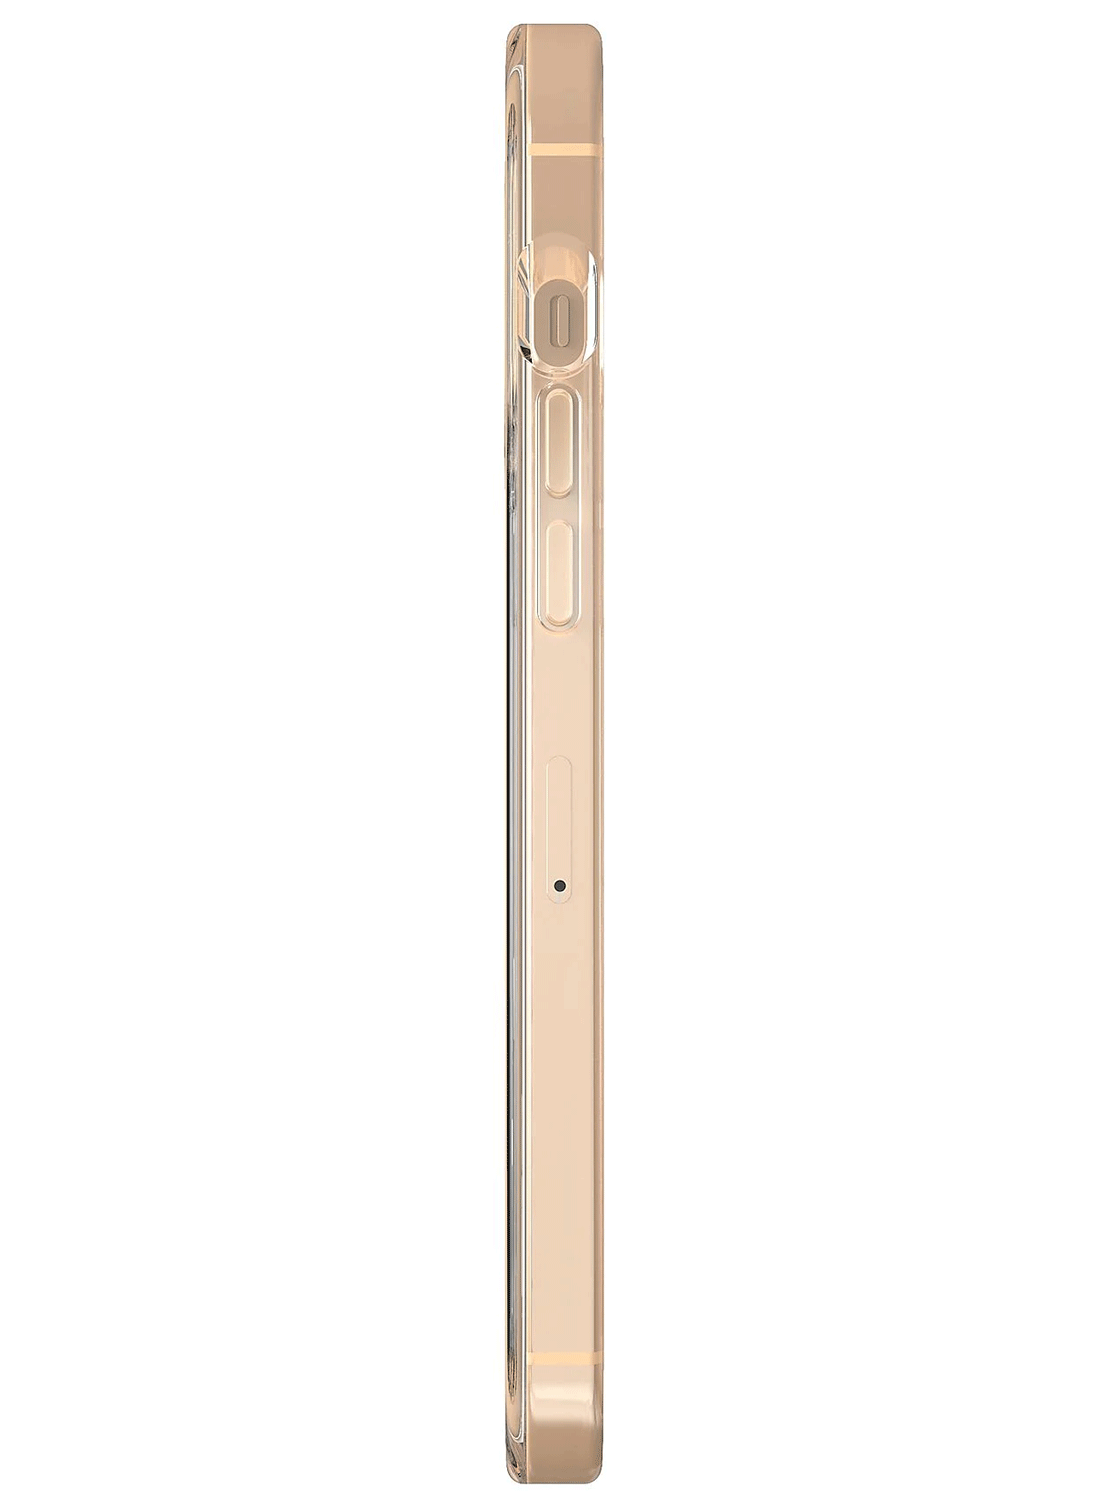 Gear4 Crystal Palace Case für das iPhone 12 Pro Max